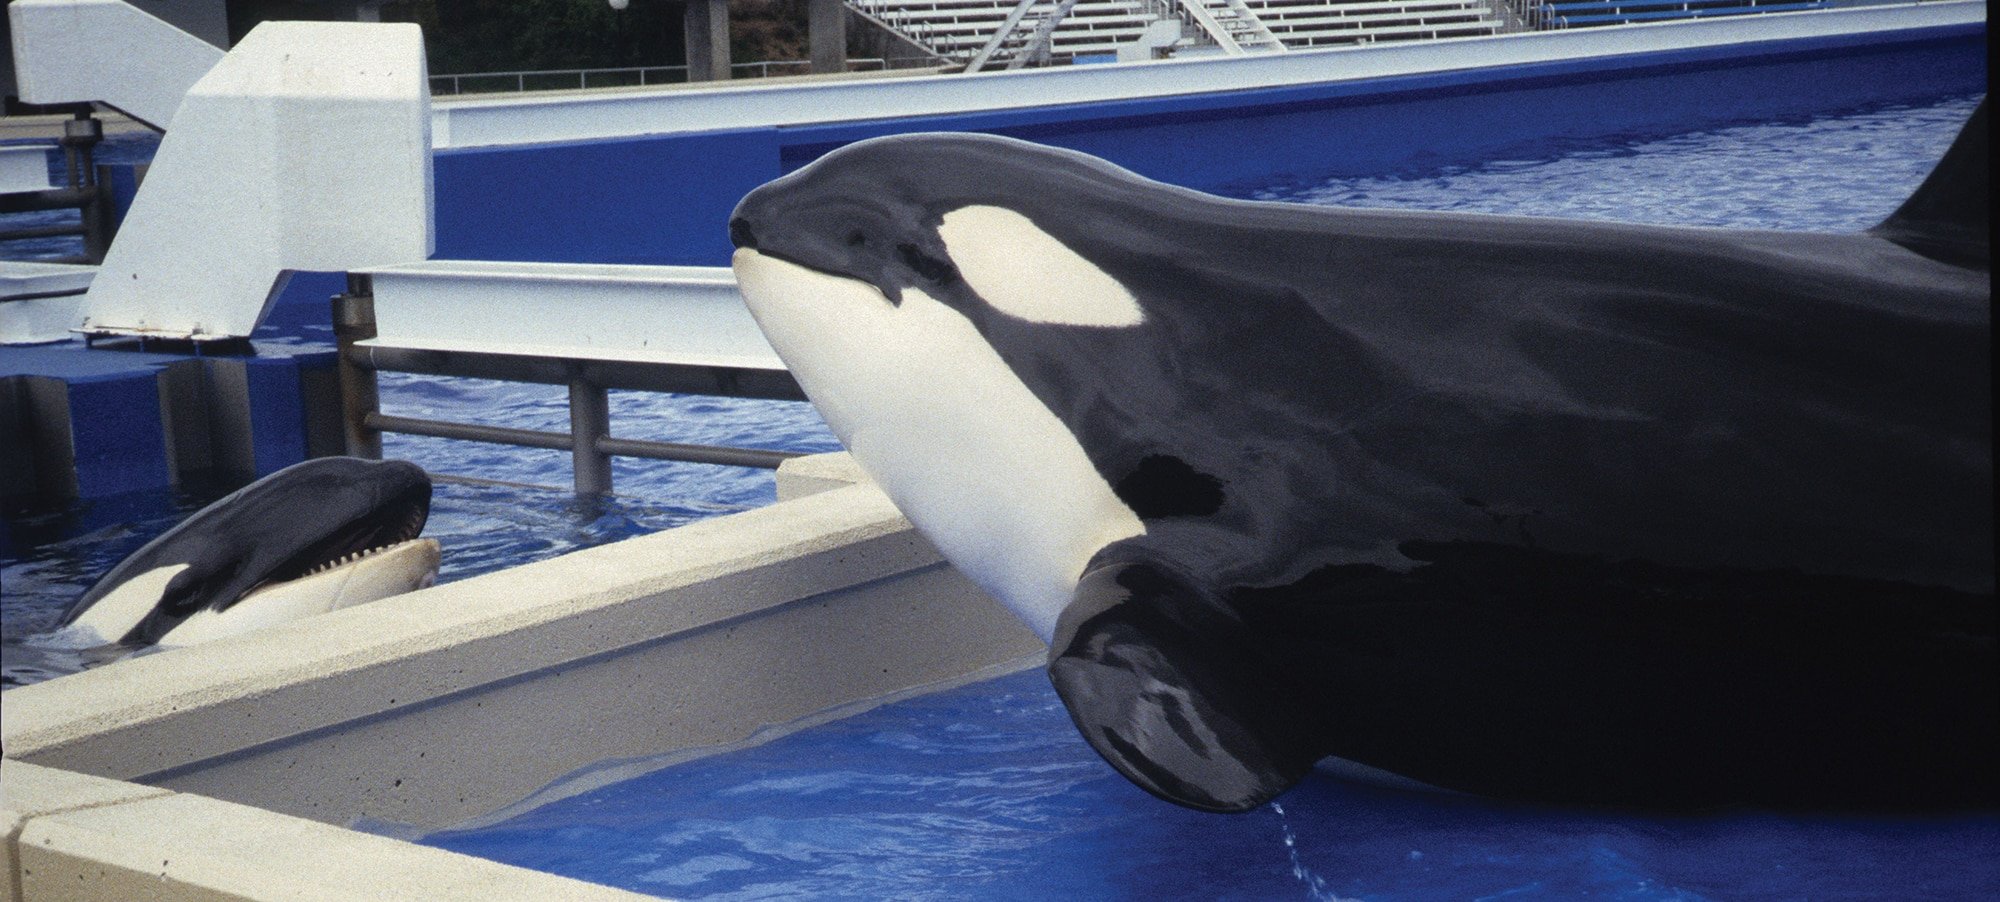 Orcas in captivity